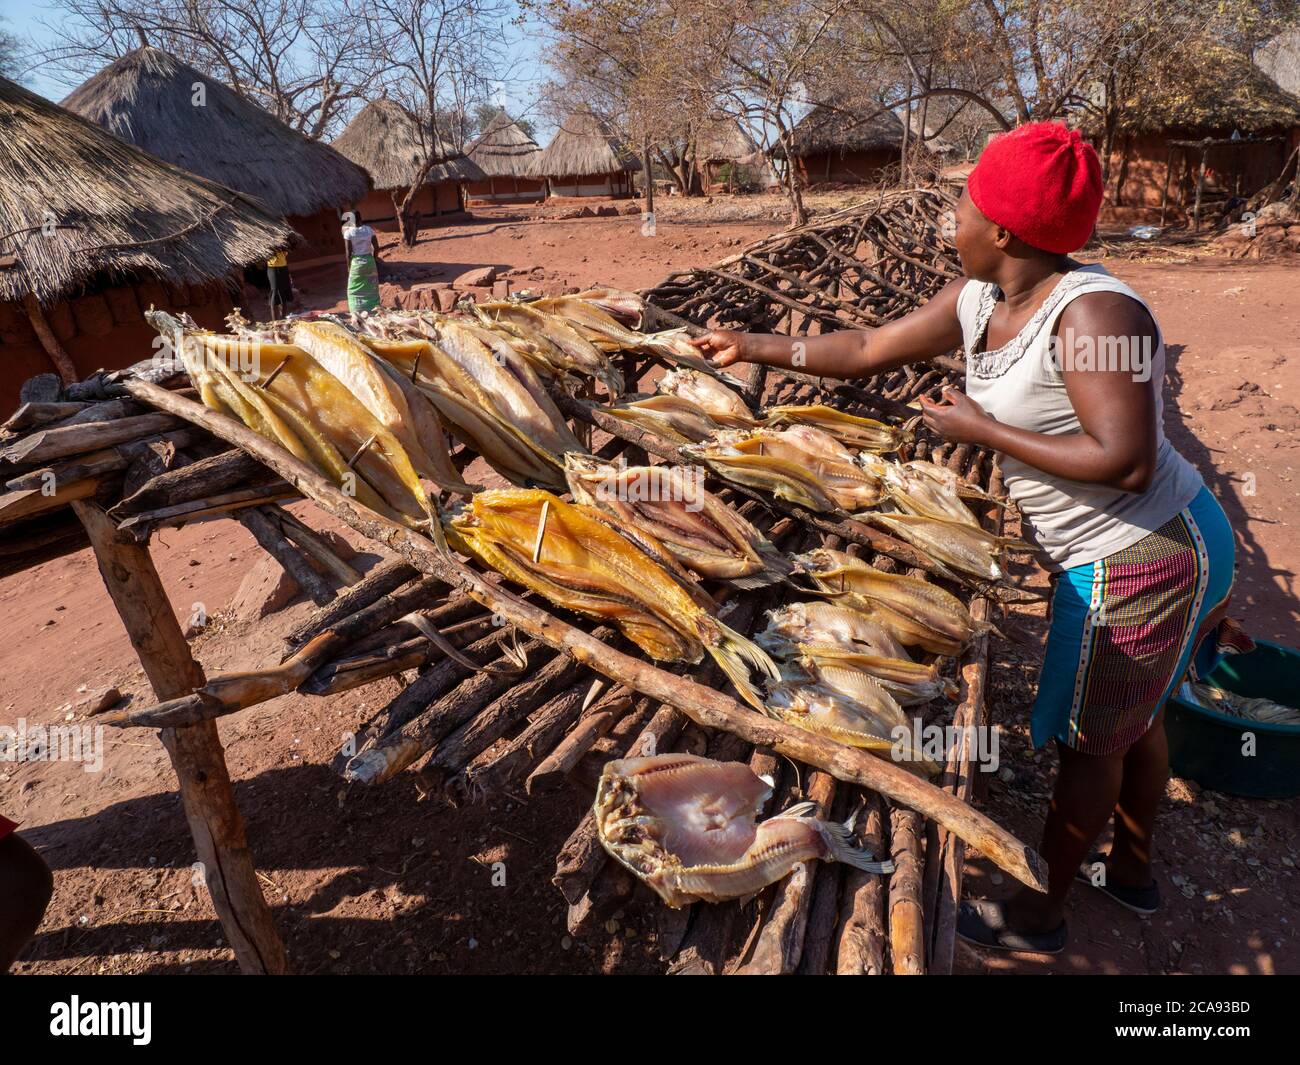 The days catch of fish drying in the sun in the fishing village of Musamba, on the shoreline of Lake Kariba, Zimbabwe, Africa Stock Photo